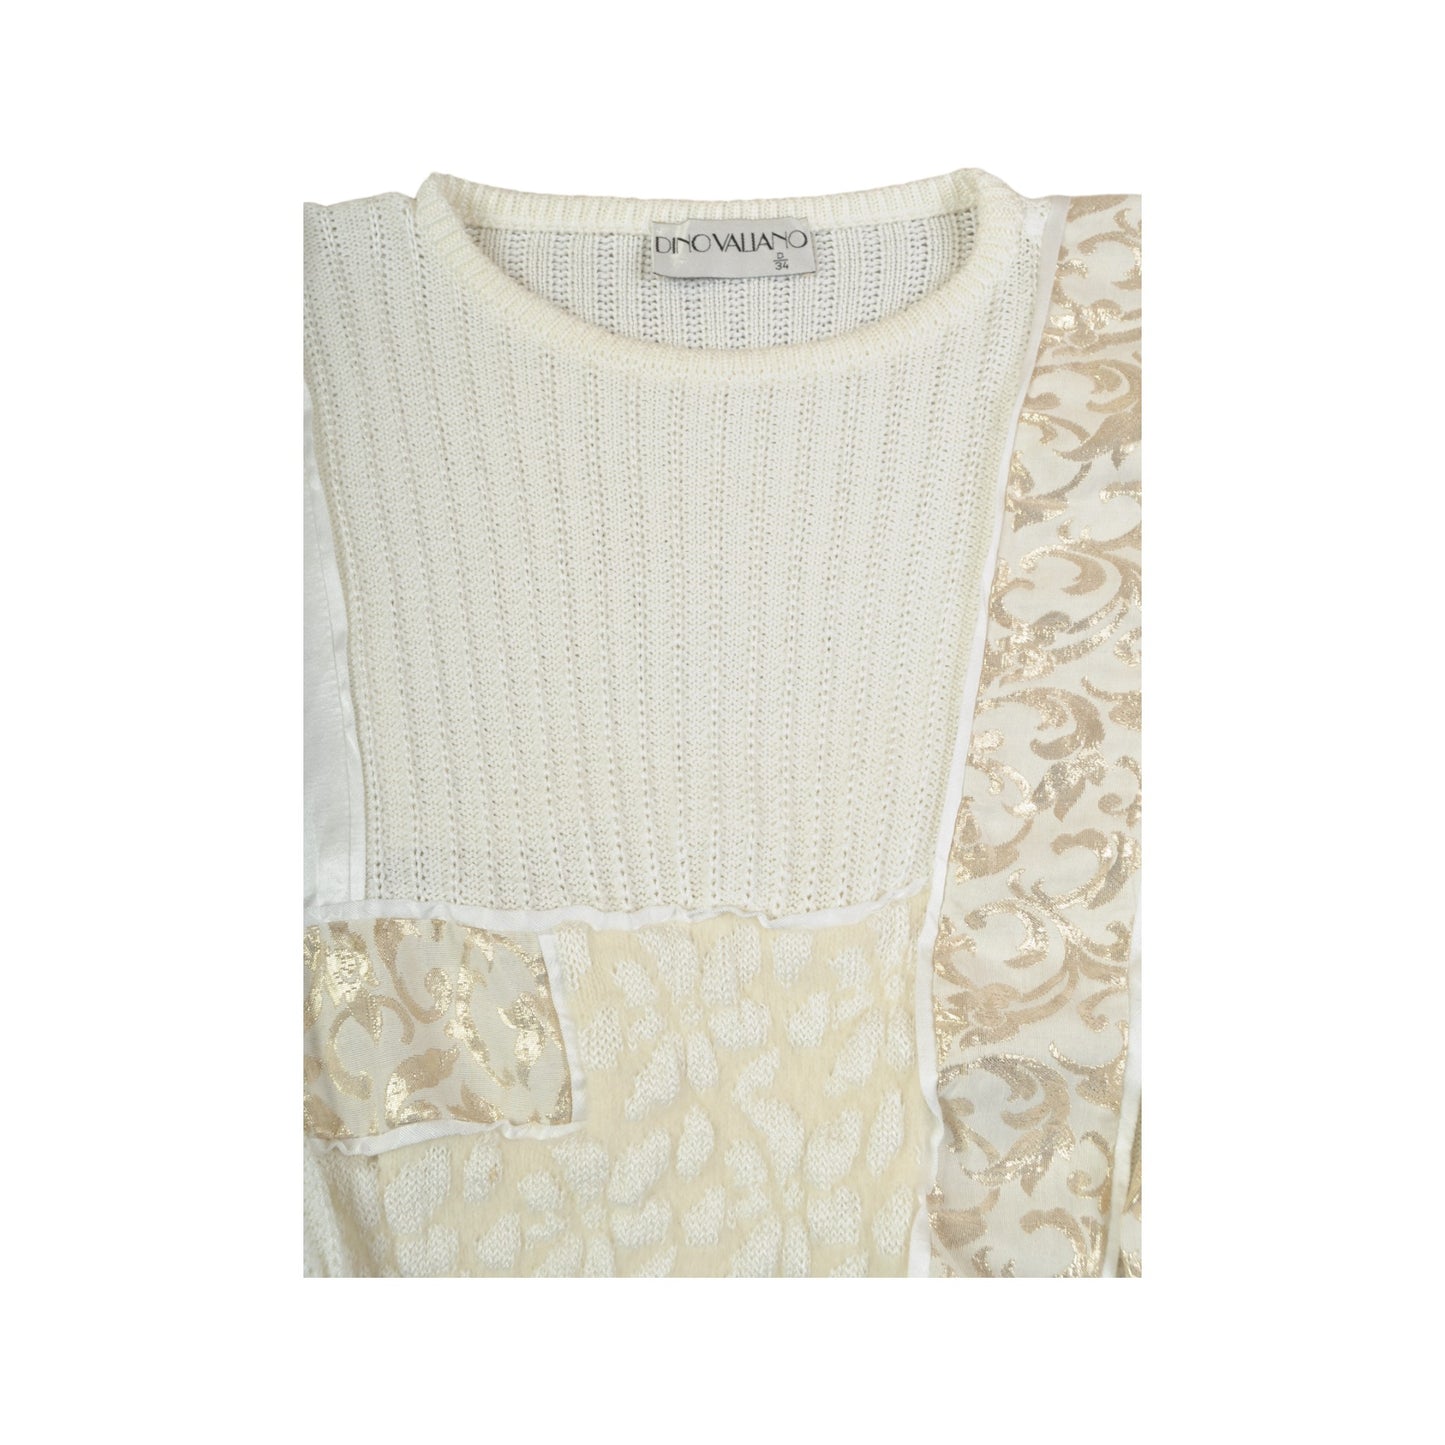 Vintage 80s Knitwear Sweater Retro Pattern White Ladies Small